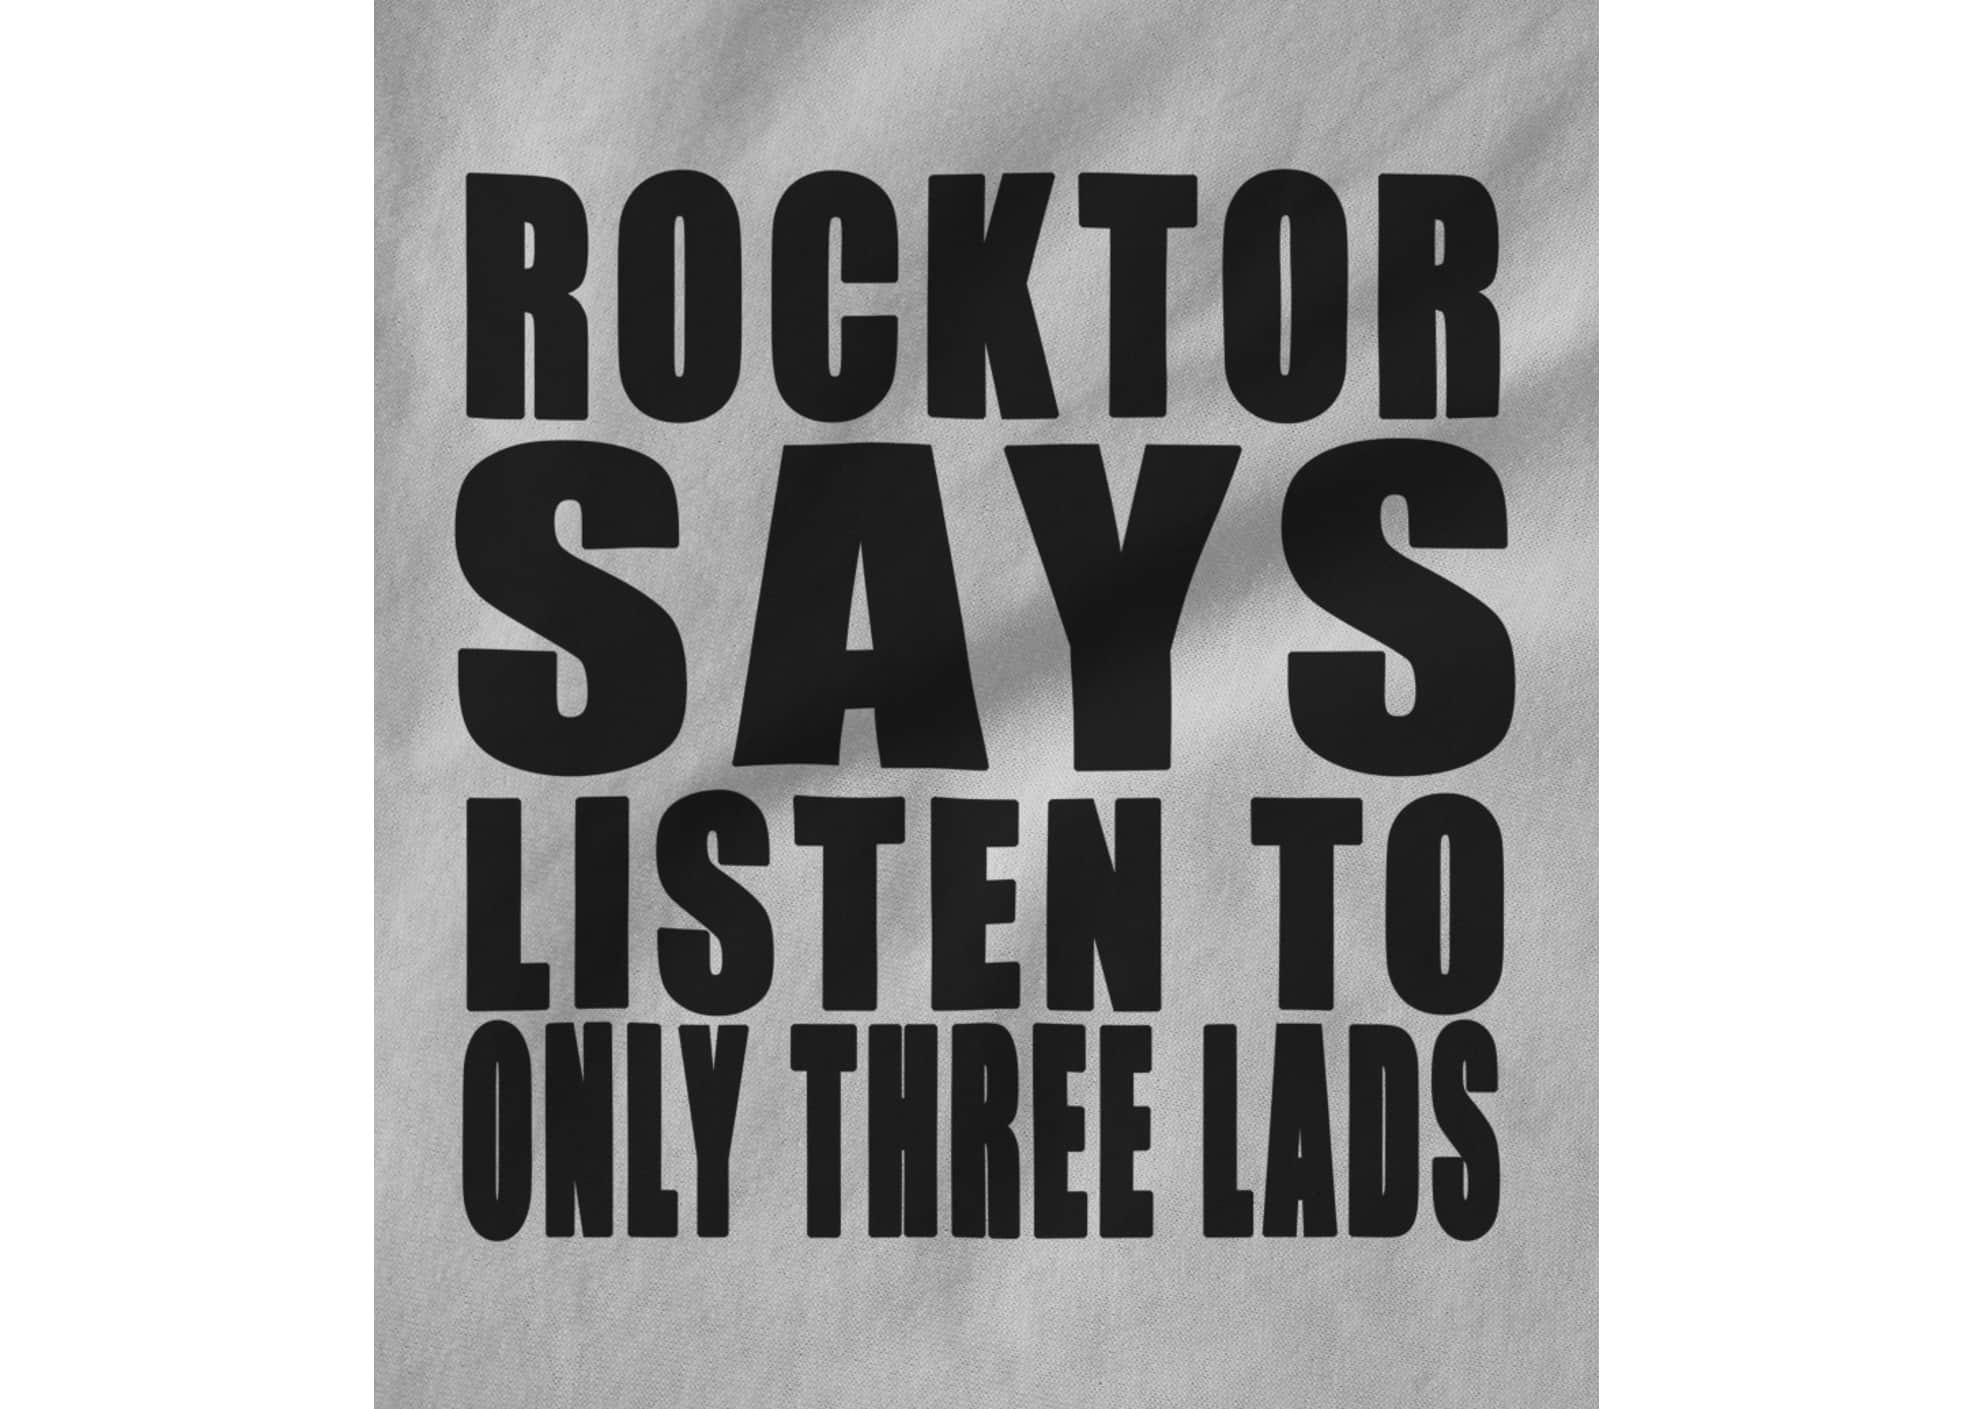 Only three lads rocktor says 1619061218